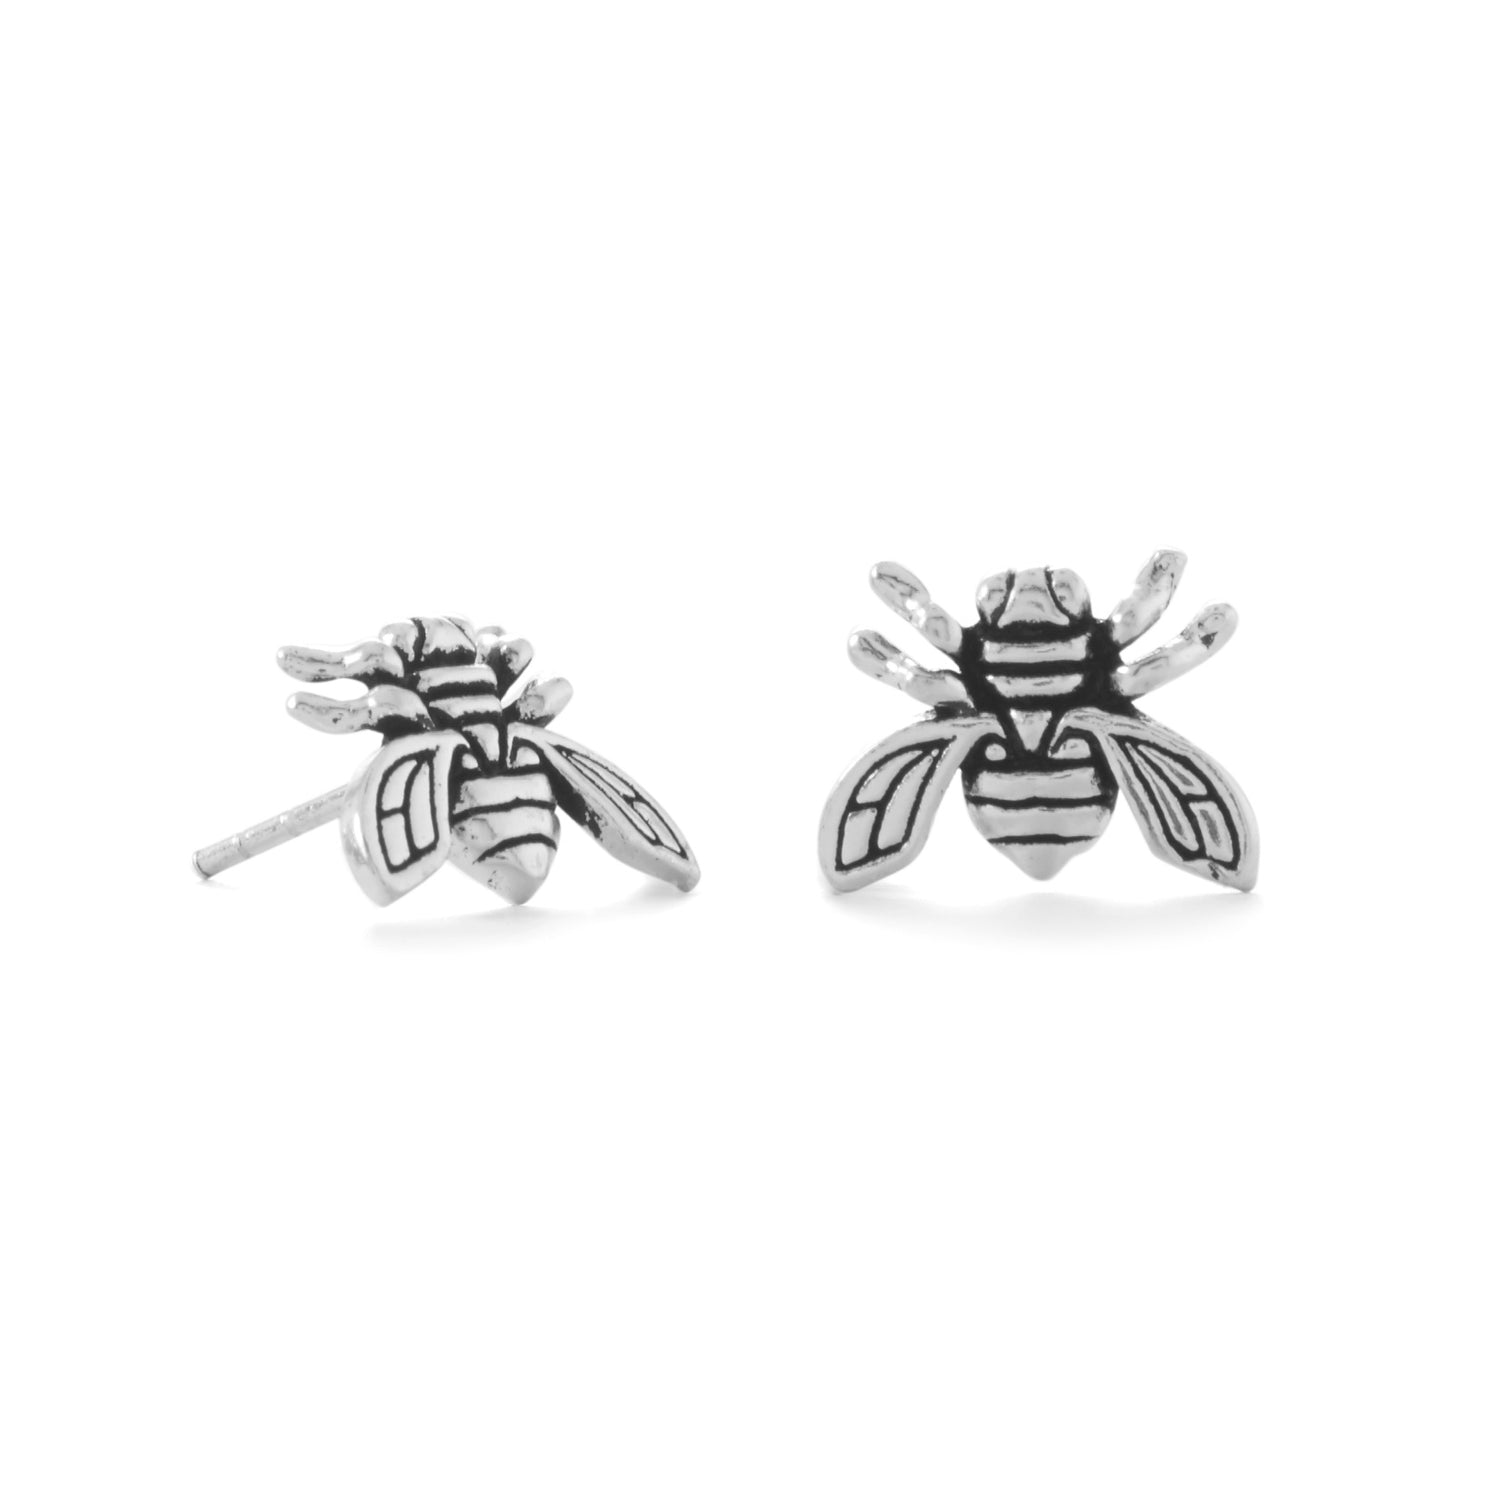 "Be the Buzz!" Oxidized Buzzing Bee Stud Earrings